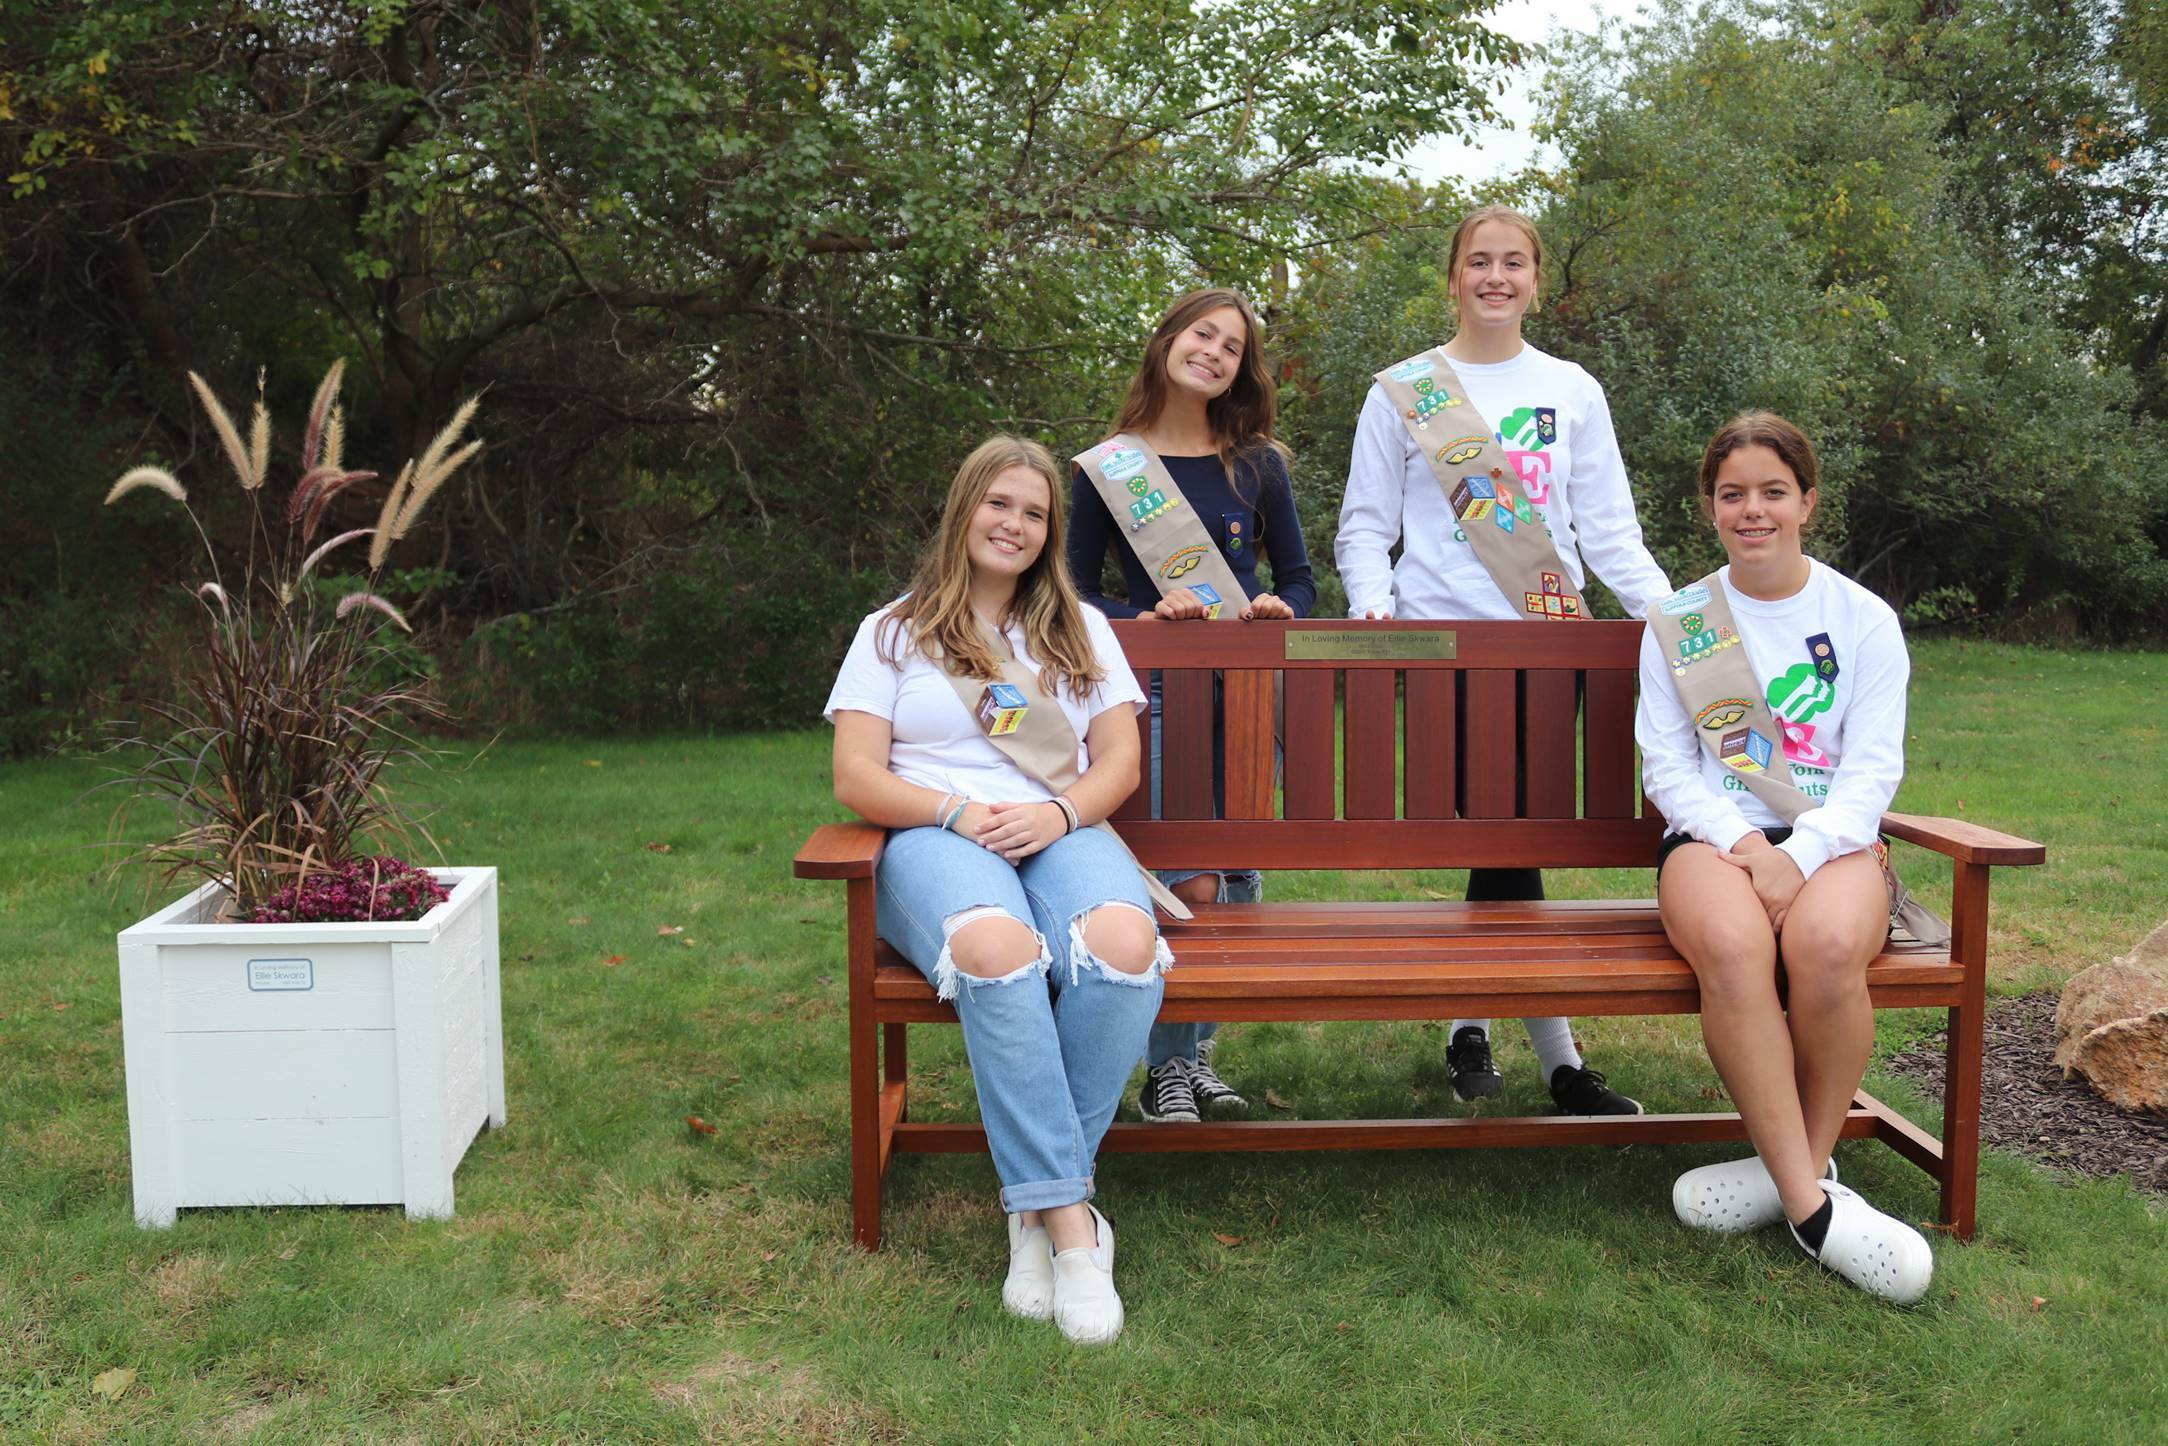 From left, Girl Scouts Julia Cardi, Reagan Treharne, Ashleigh Doering and Jordyn Kollen.